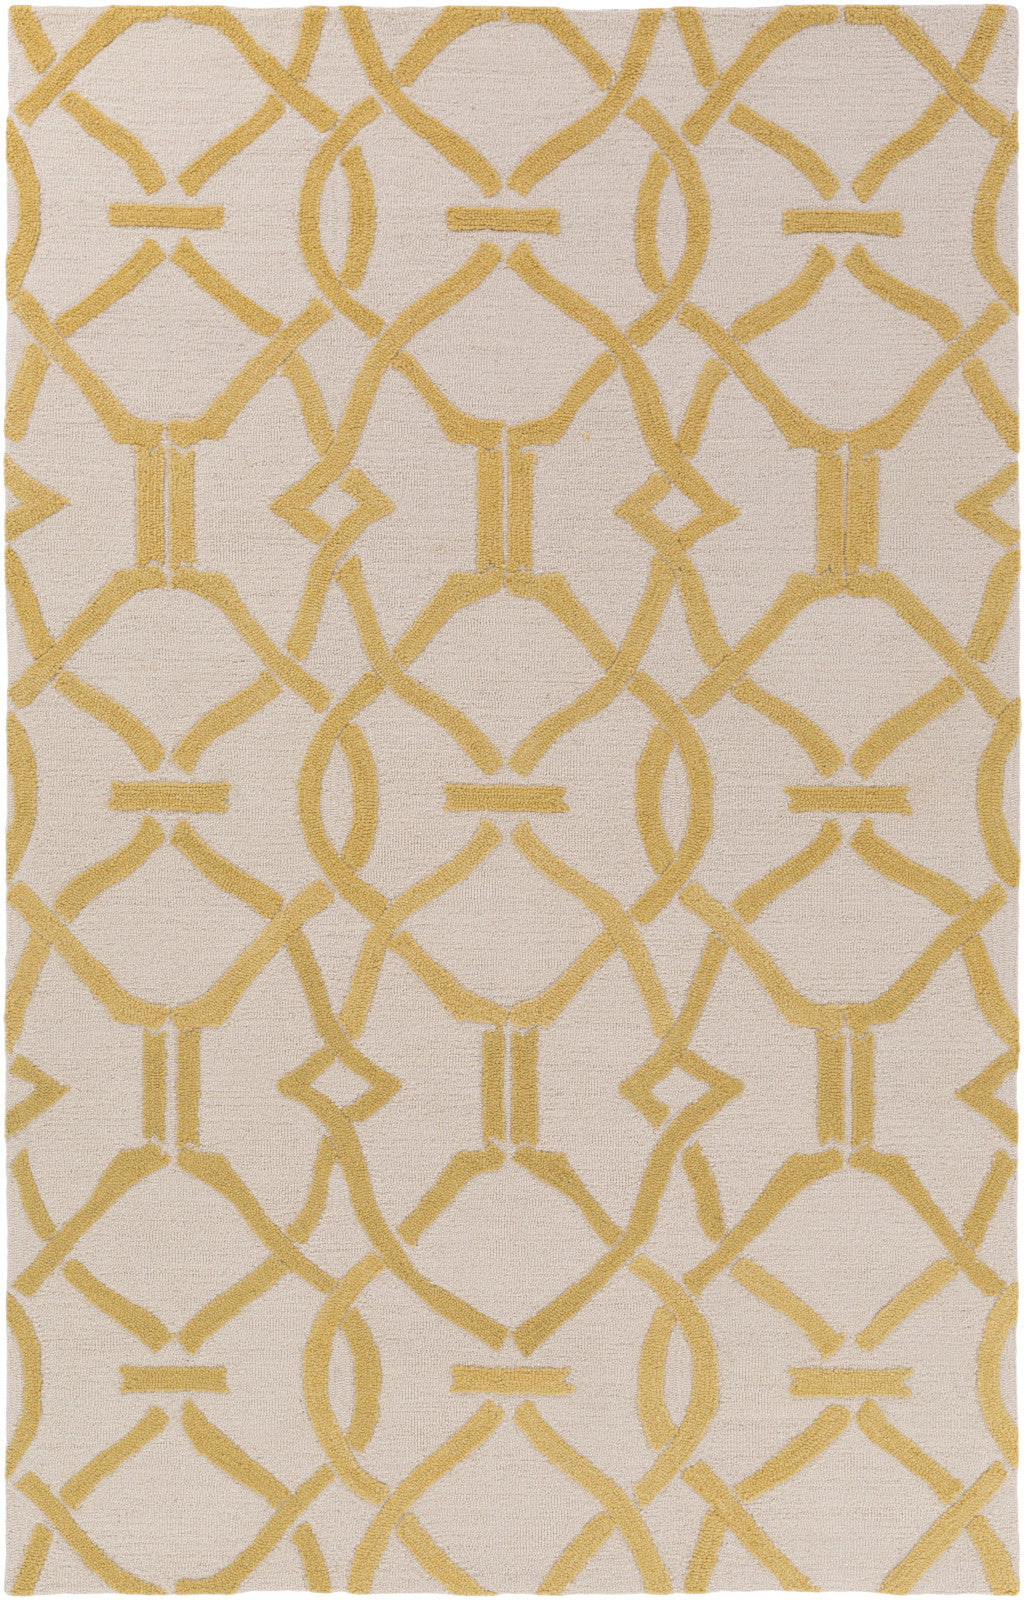 Artistic Weavers Marigold Serena Light Yellow/Ivory Area Rug main image